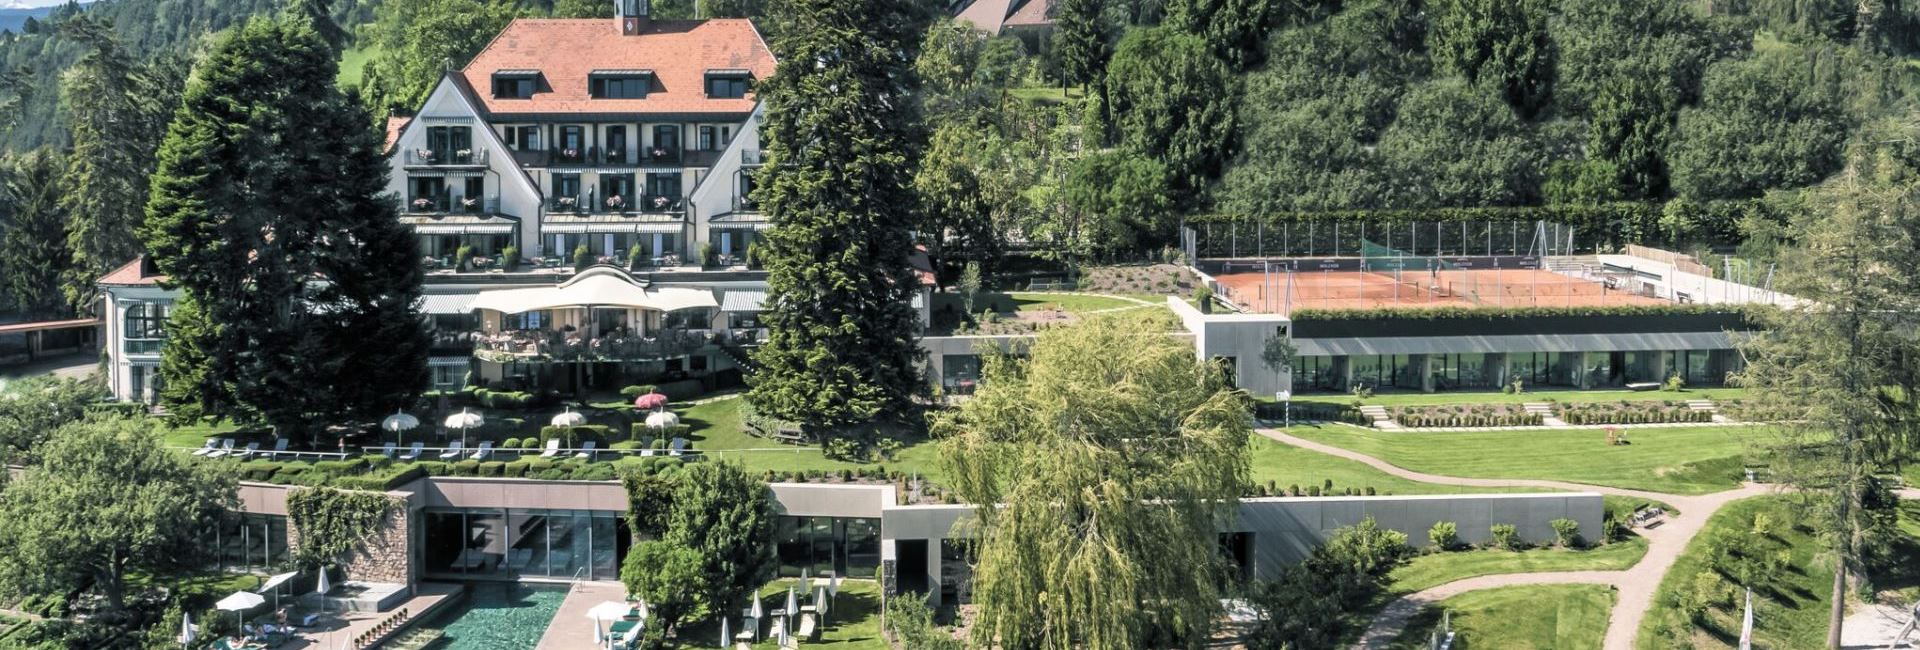 Parkhotel Holzner in Oberbozen, Südtirol